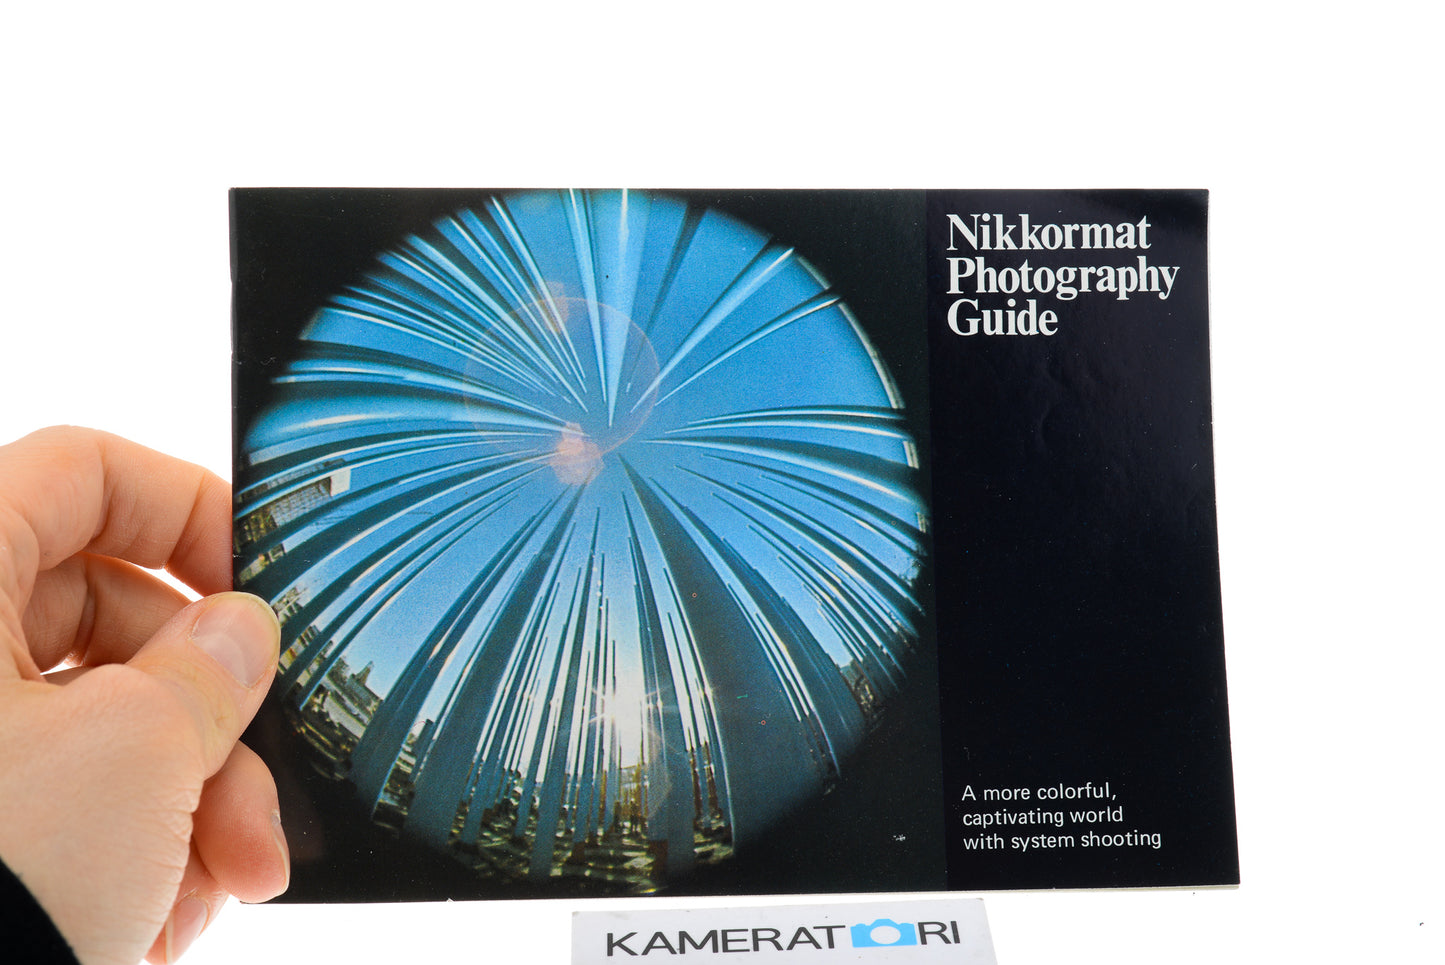 Nikon Nikkormat Photography Guide